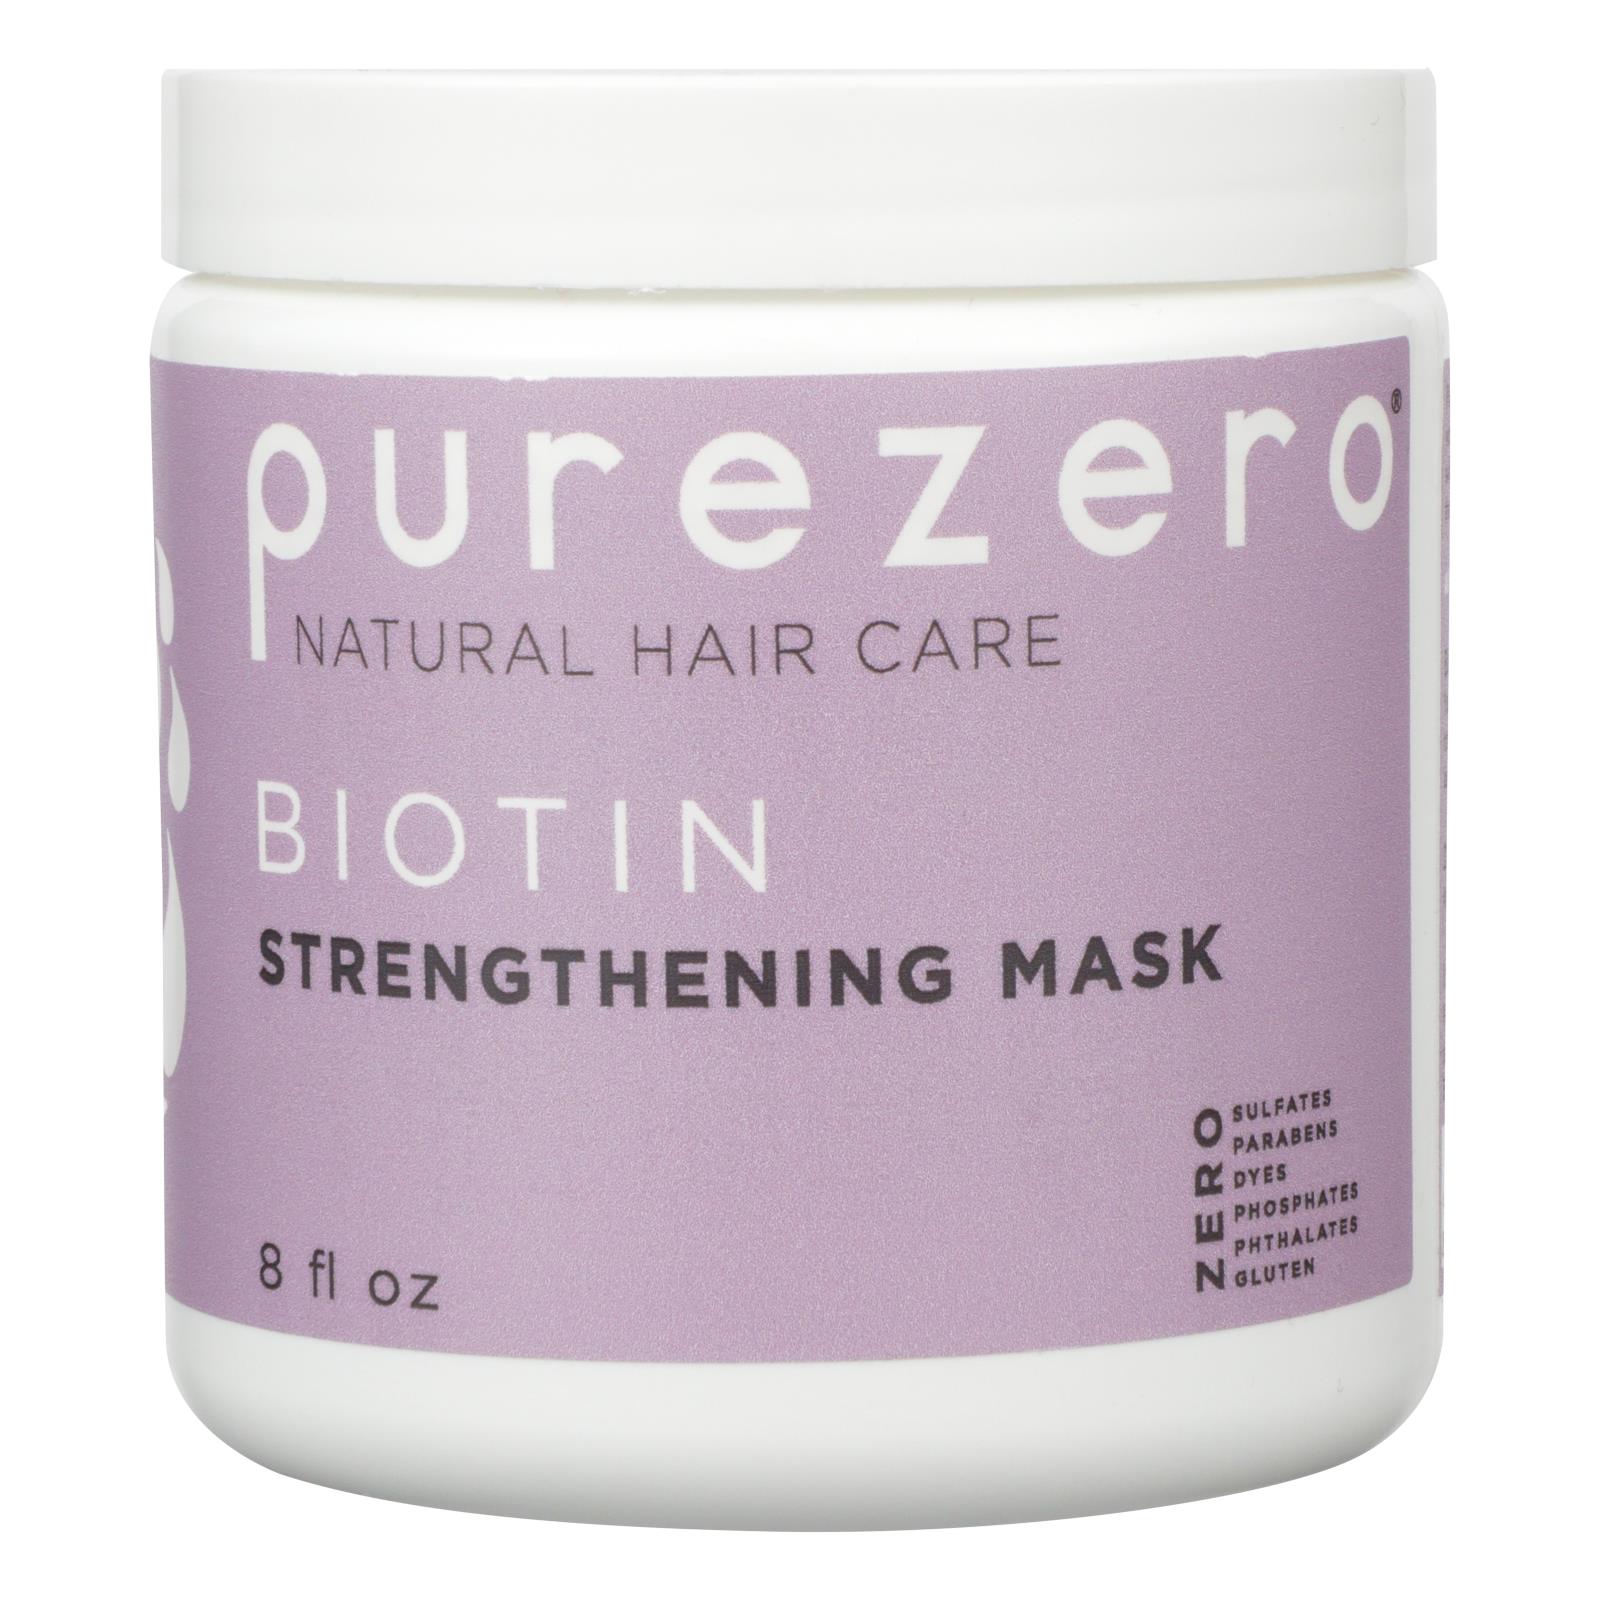 Purezero - Mask Biotin Strengthening - 1 Each - 8 OZ